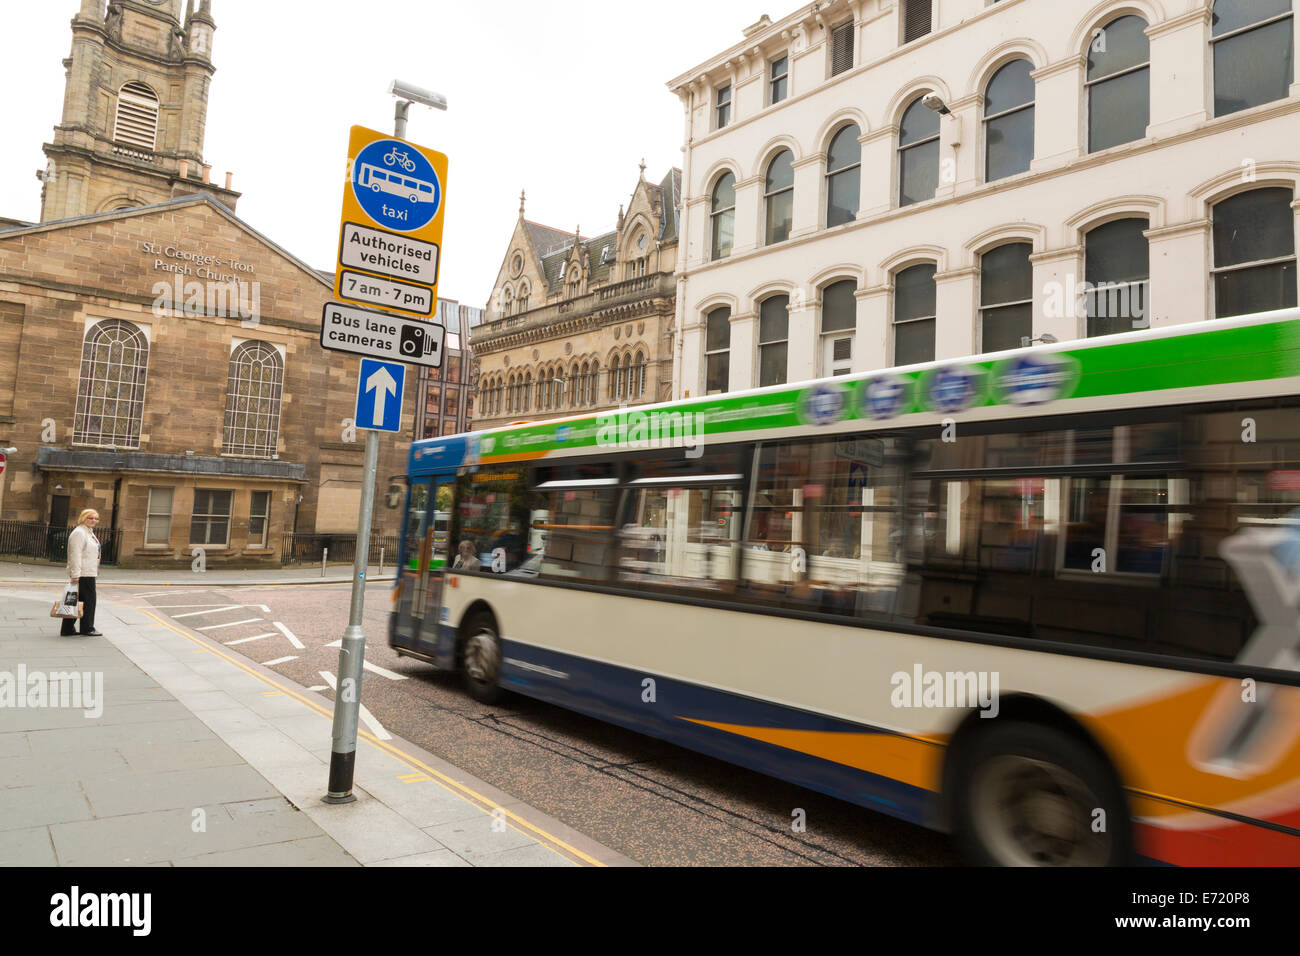 Bus going through a bus & taxi camera lane, Nelson Mandela Place, Glasgow, Scotland. Stock Photo